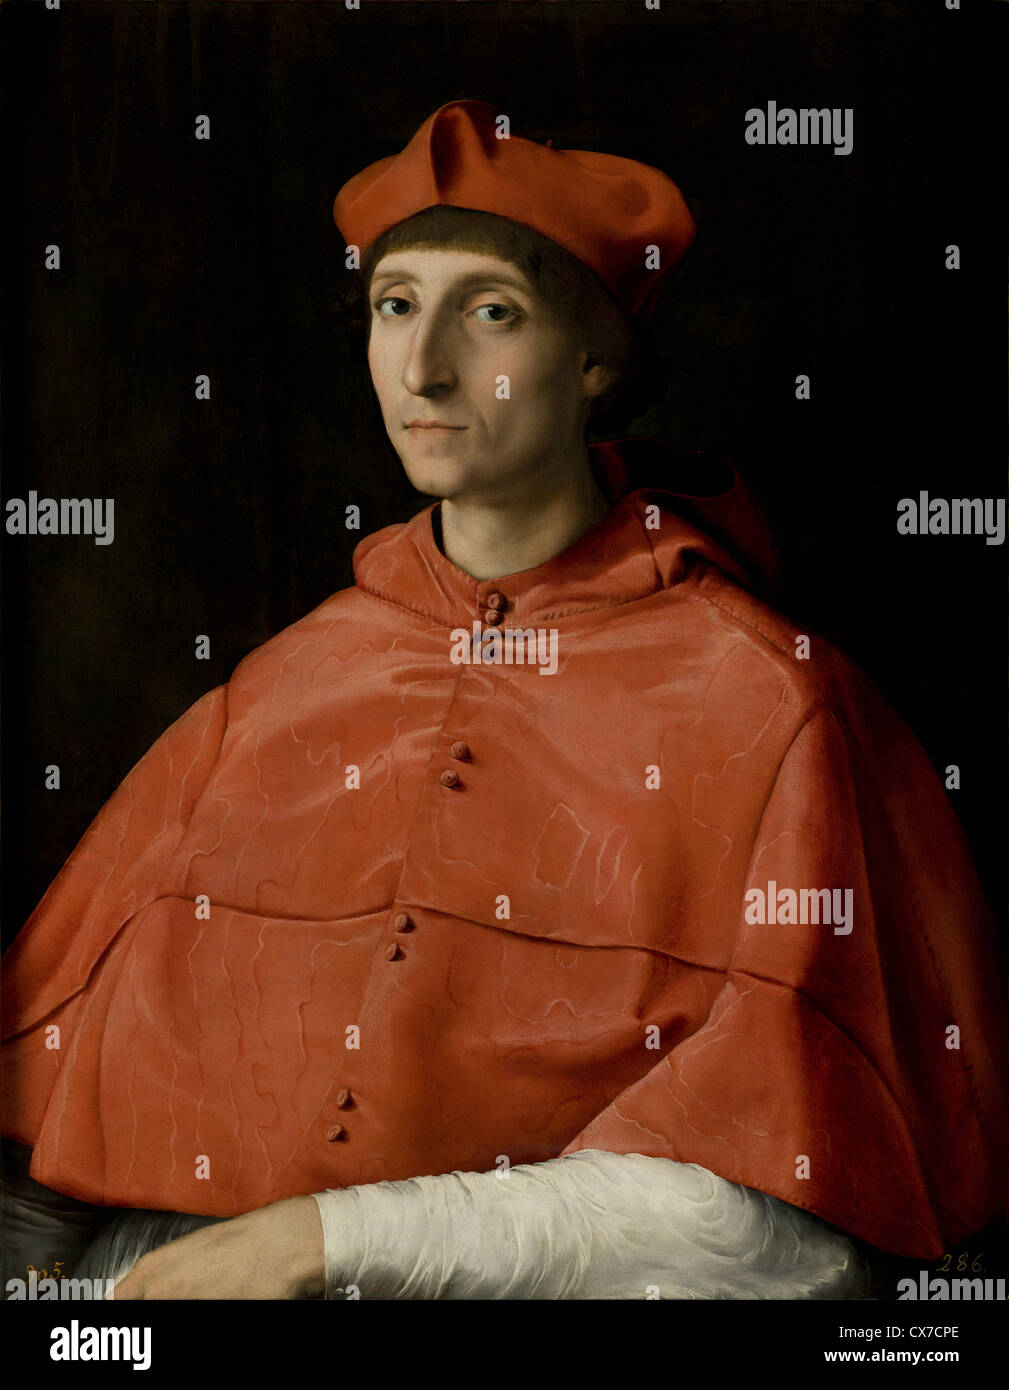 Portrait of a Cardinal by Raphael (Raffaello Sanzio da Urbino), circa 1510 - Very high quality and resolution image Stock Photo